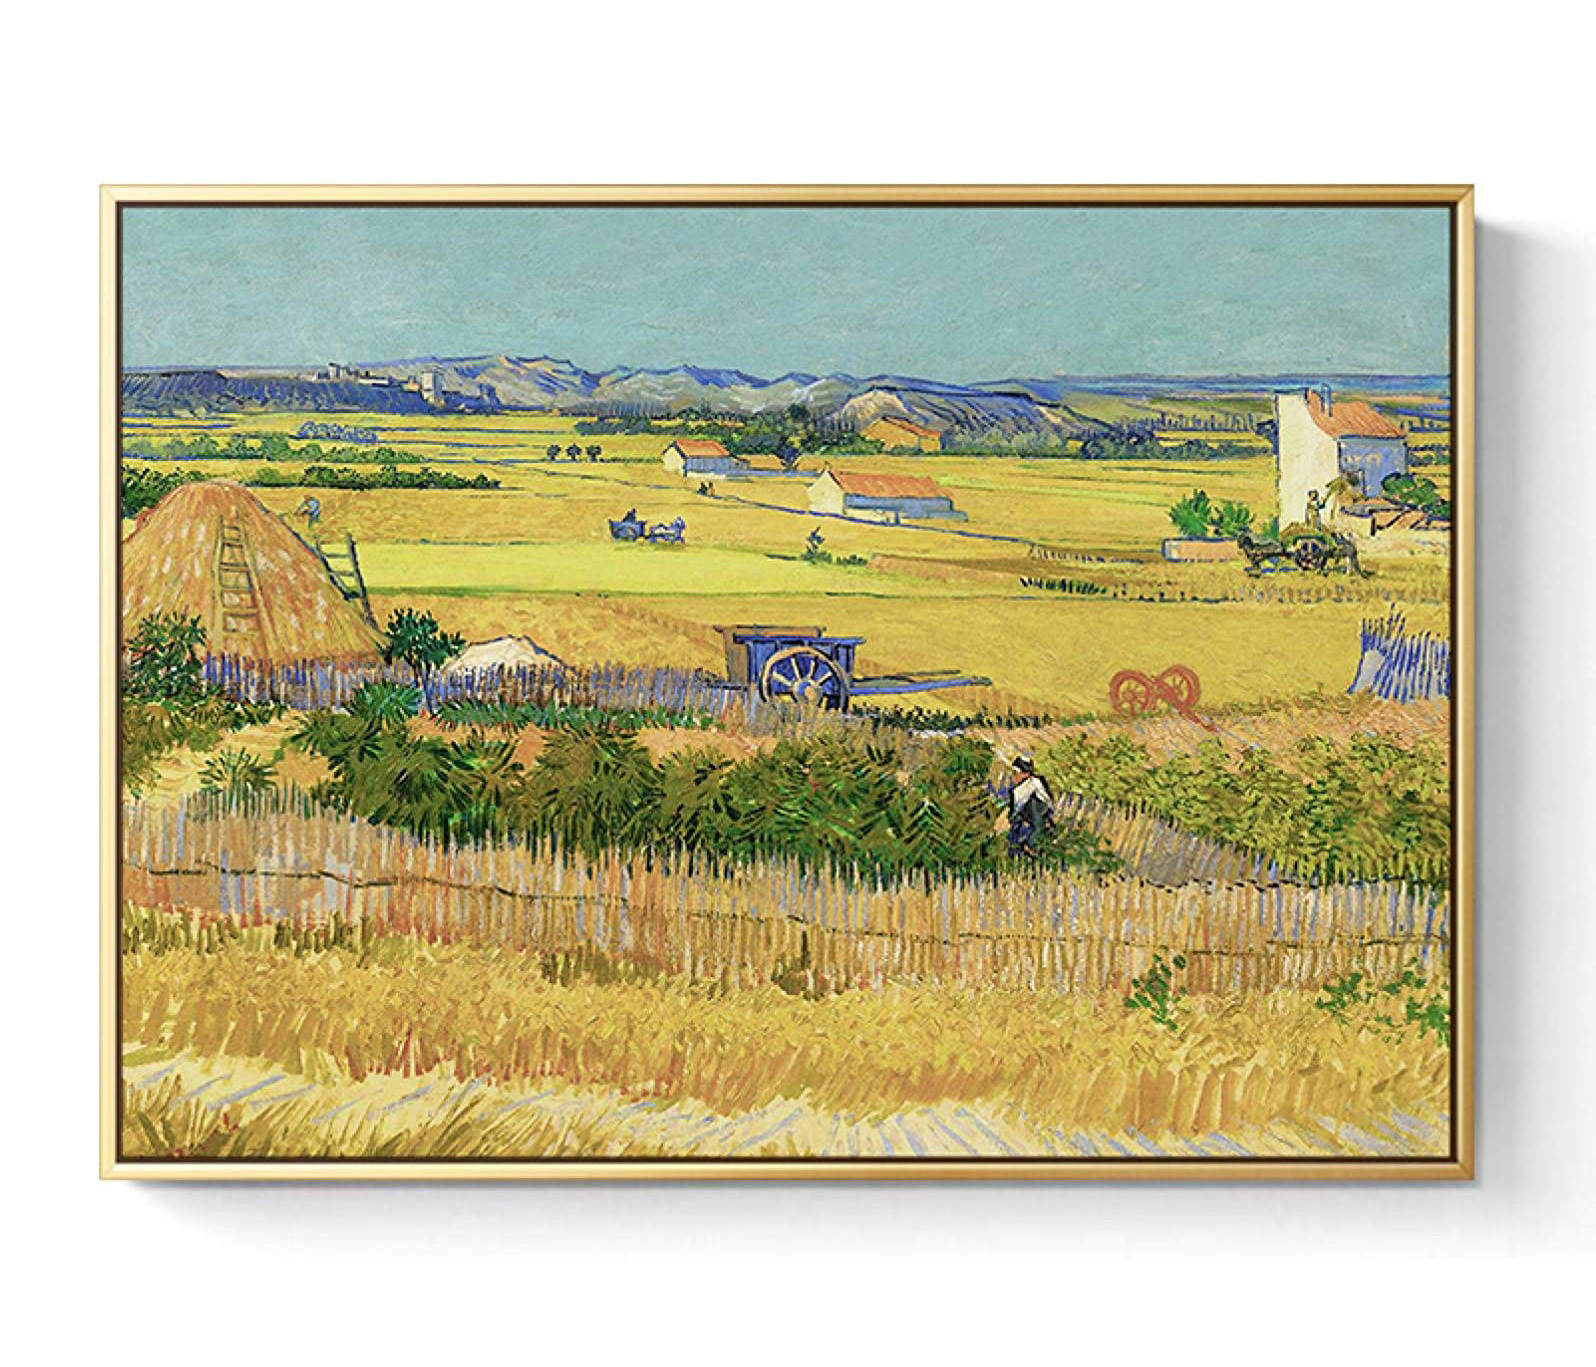 The Harvest Painting by Van Gogh Print Canvas Wall Art - 70cm x 50cm